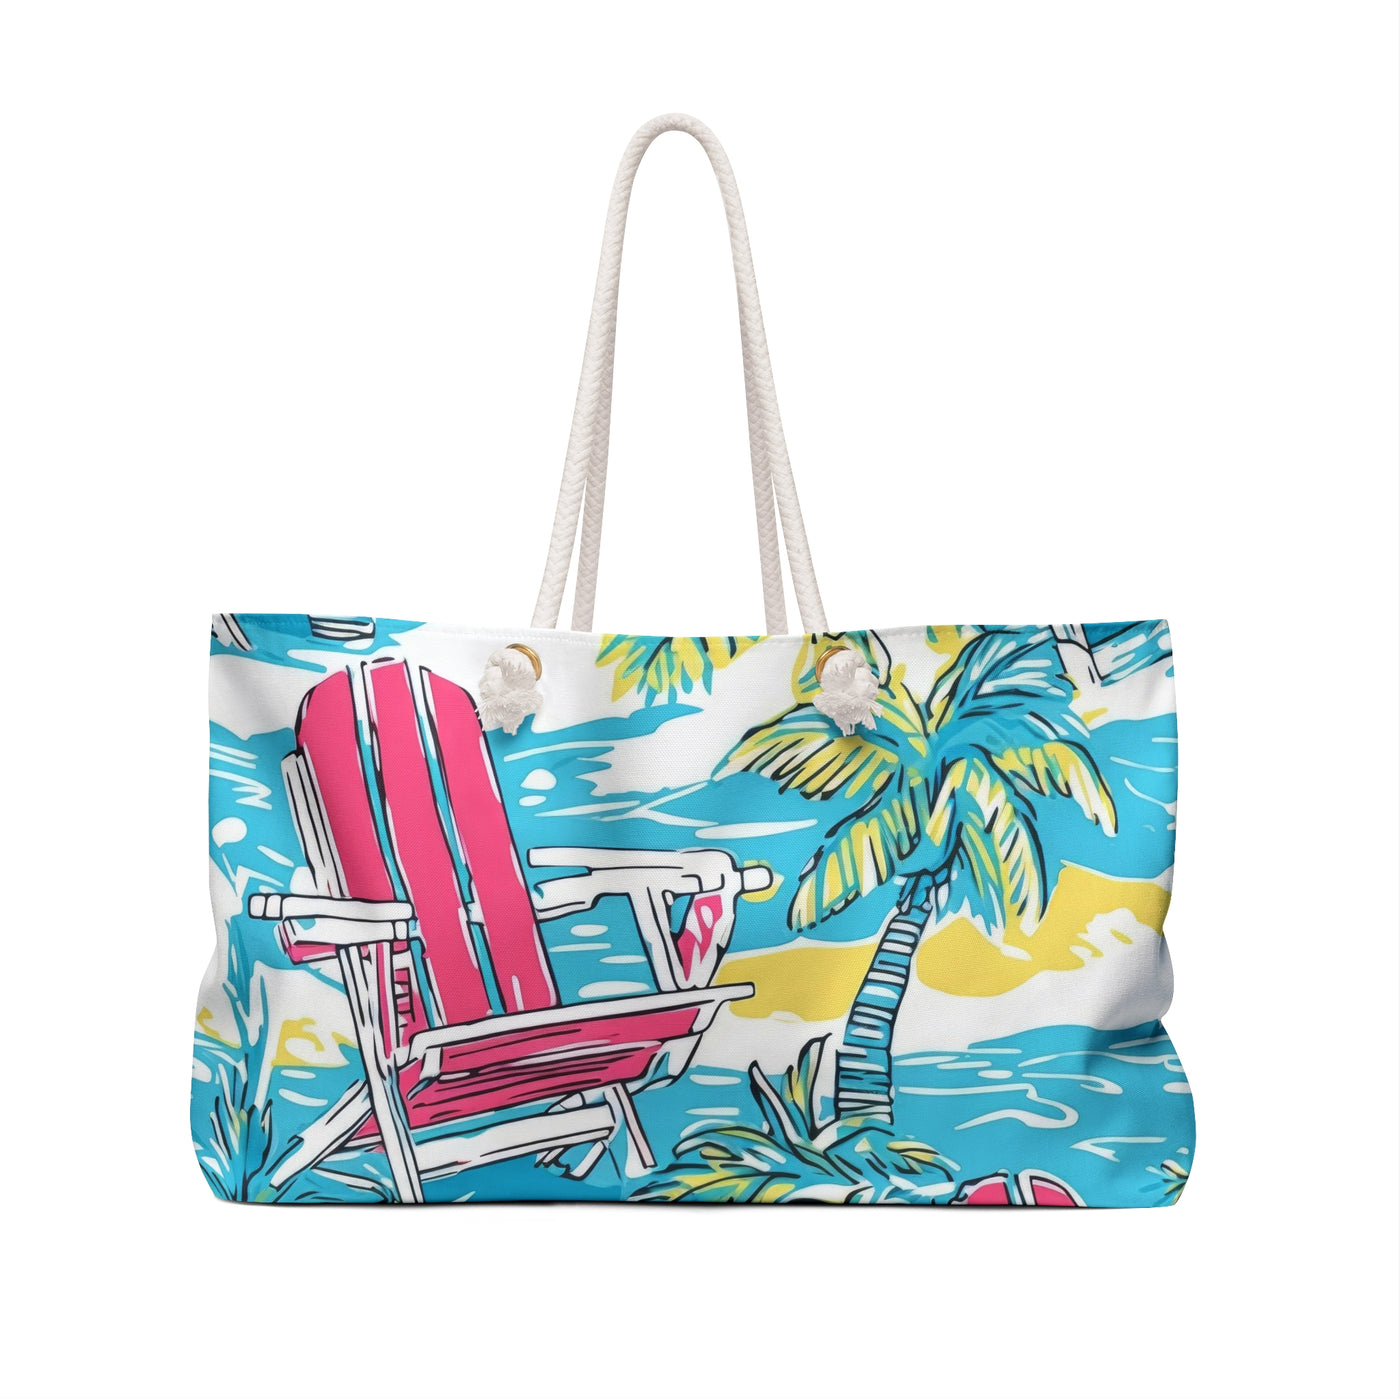 Malibu Weekender Bag - Coastal Cool - Swimwear and Beachwear - Recycled fabrics